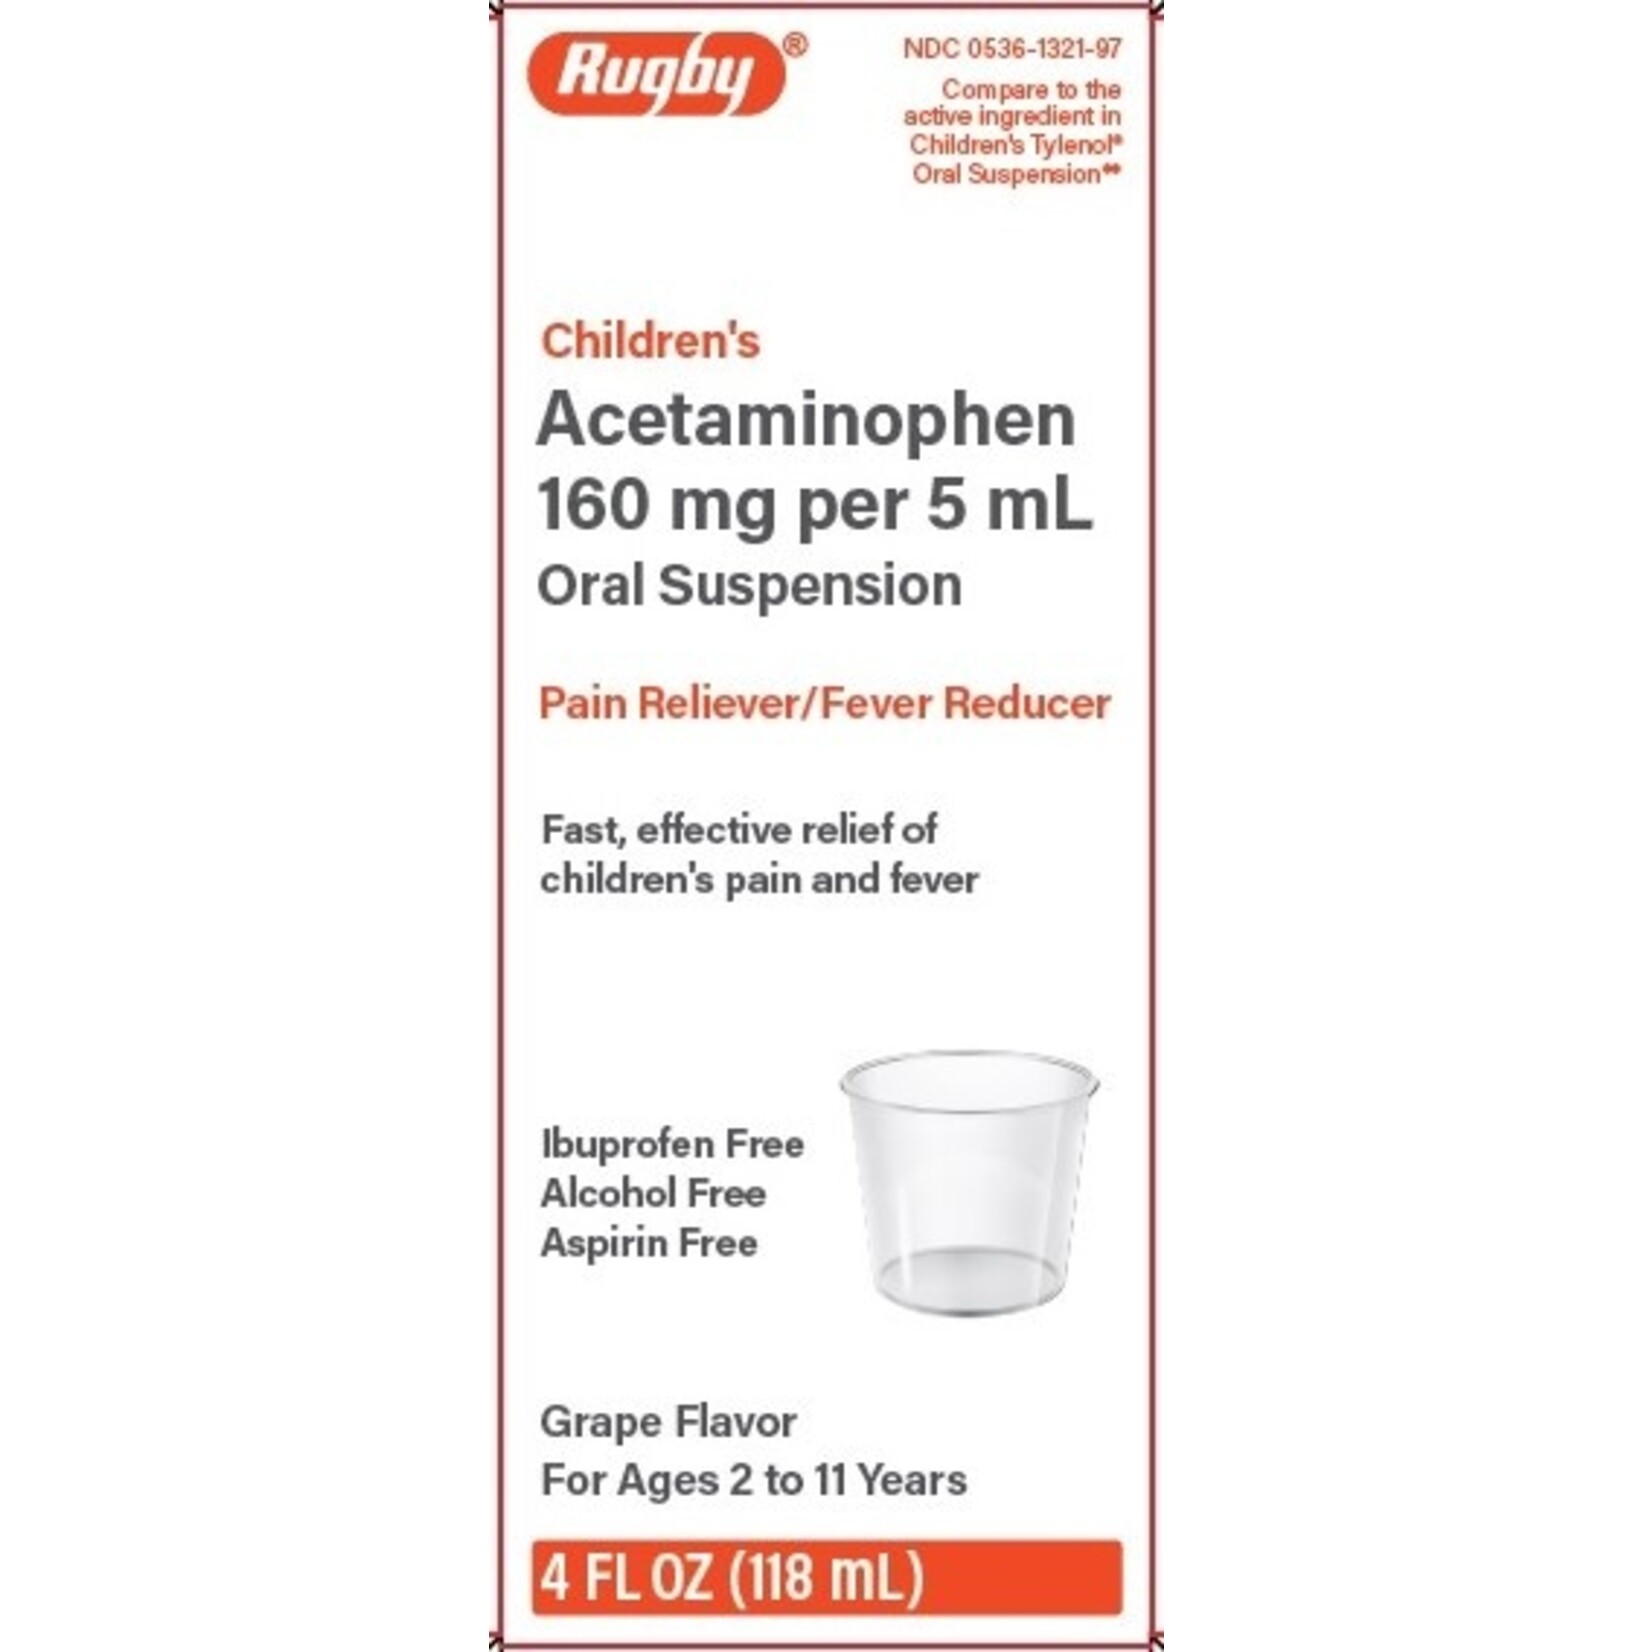 371066 - Rugby Children's Acetaminophen 160 mg/5mL (48/case)- NDC# 00536-1321-97